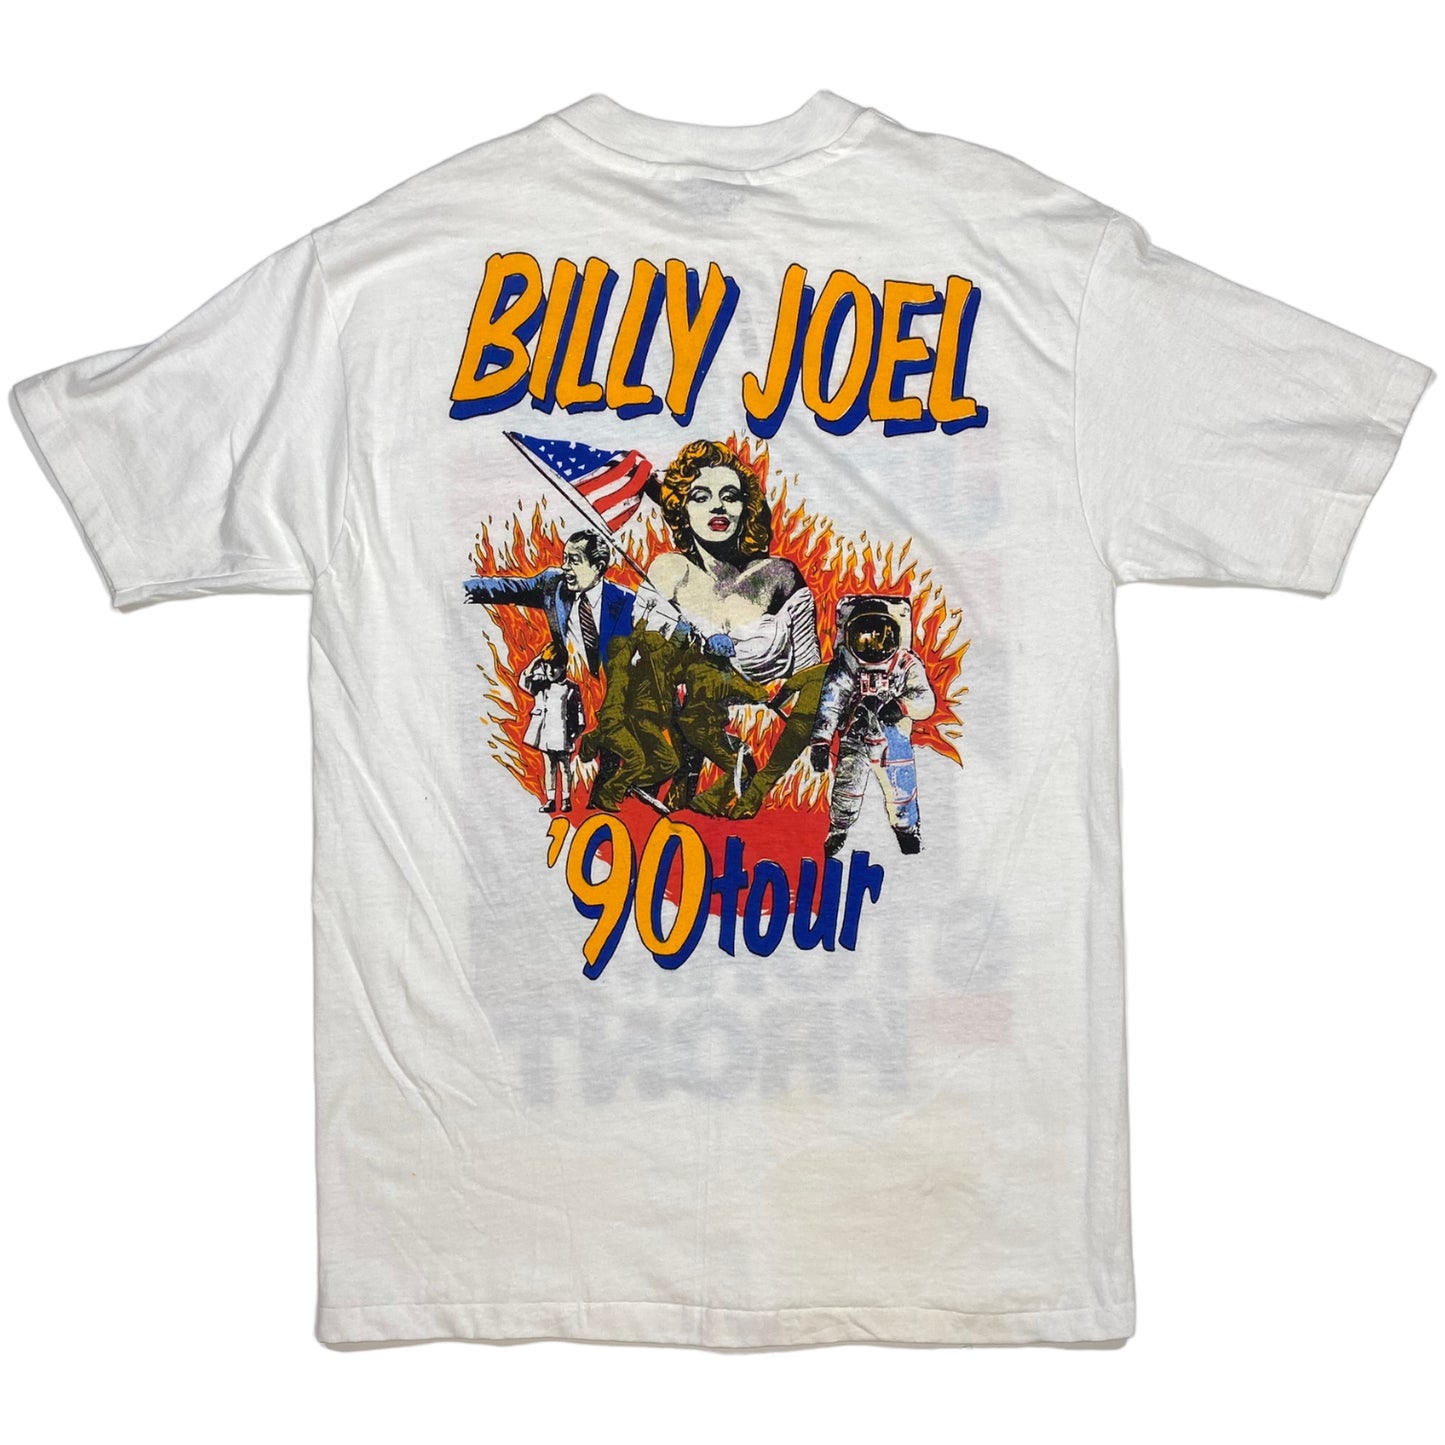 
                  
                    1990 Billy Joel - Storm Front Tour Tee
                  
                